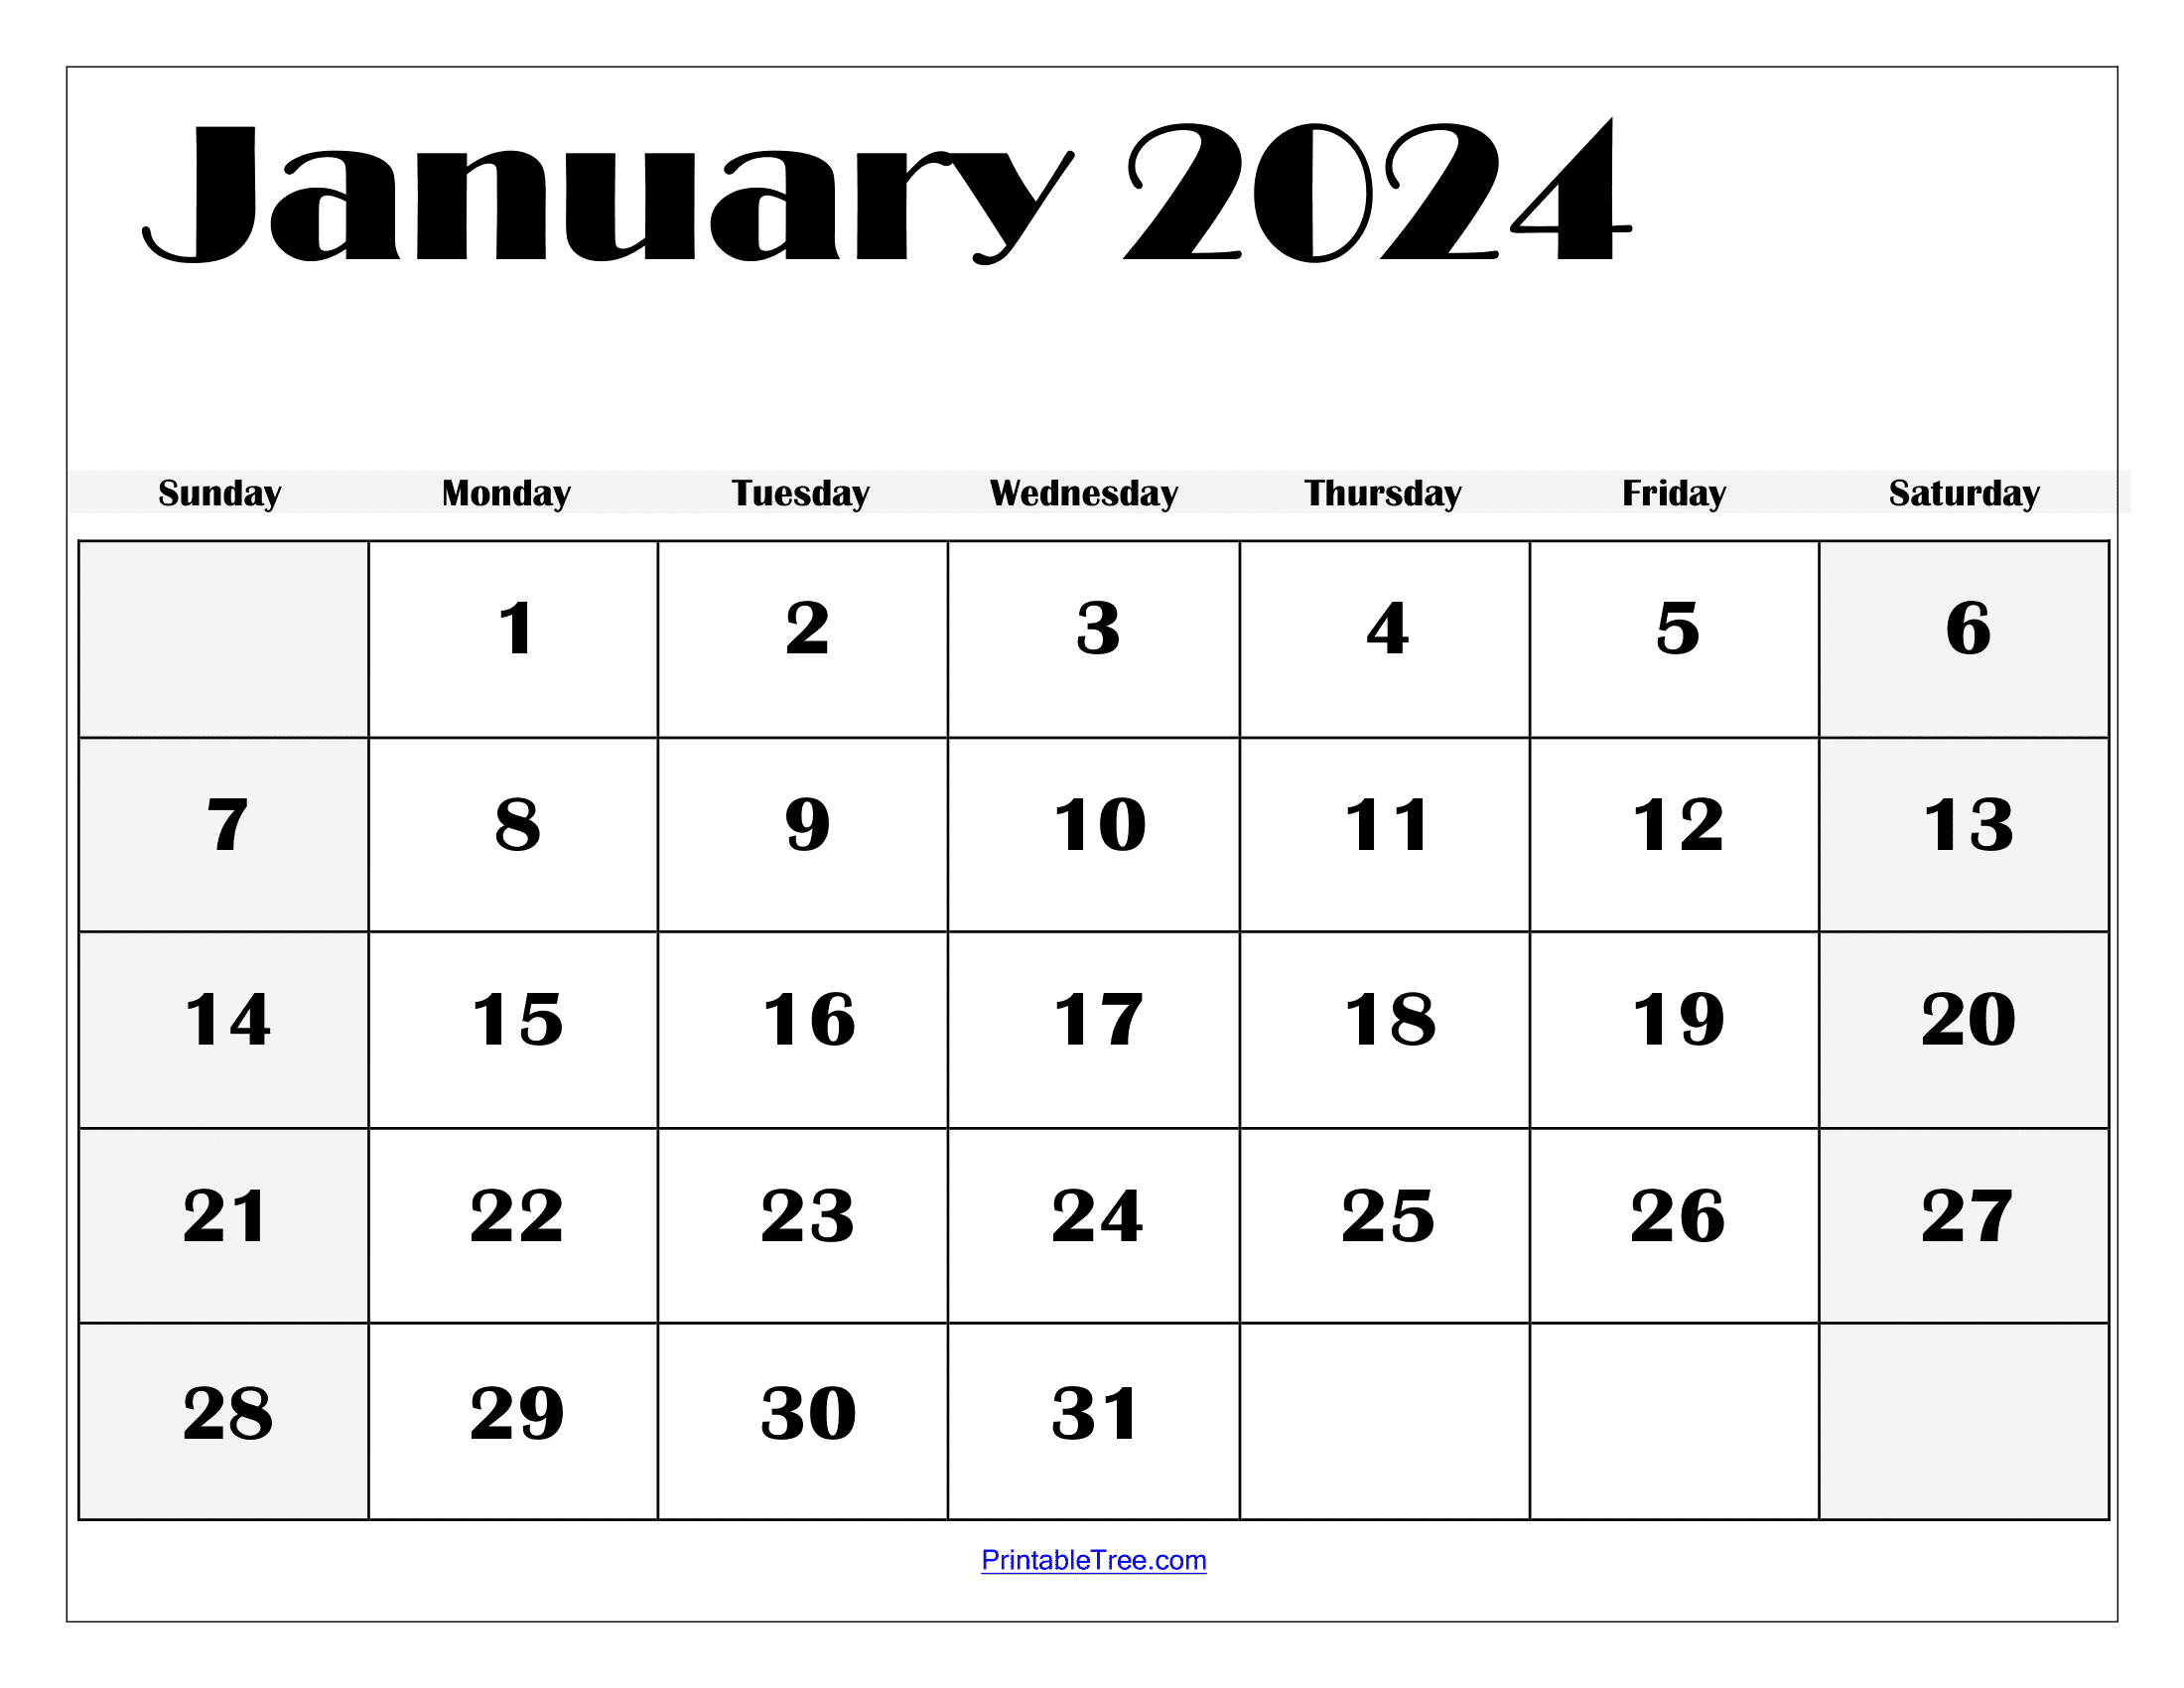 January 2024 Calendar Printable Pdf Template With Holidays for January February Printable Calendar 2024